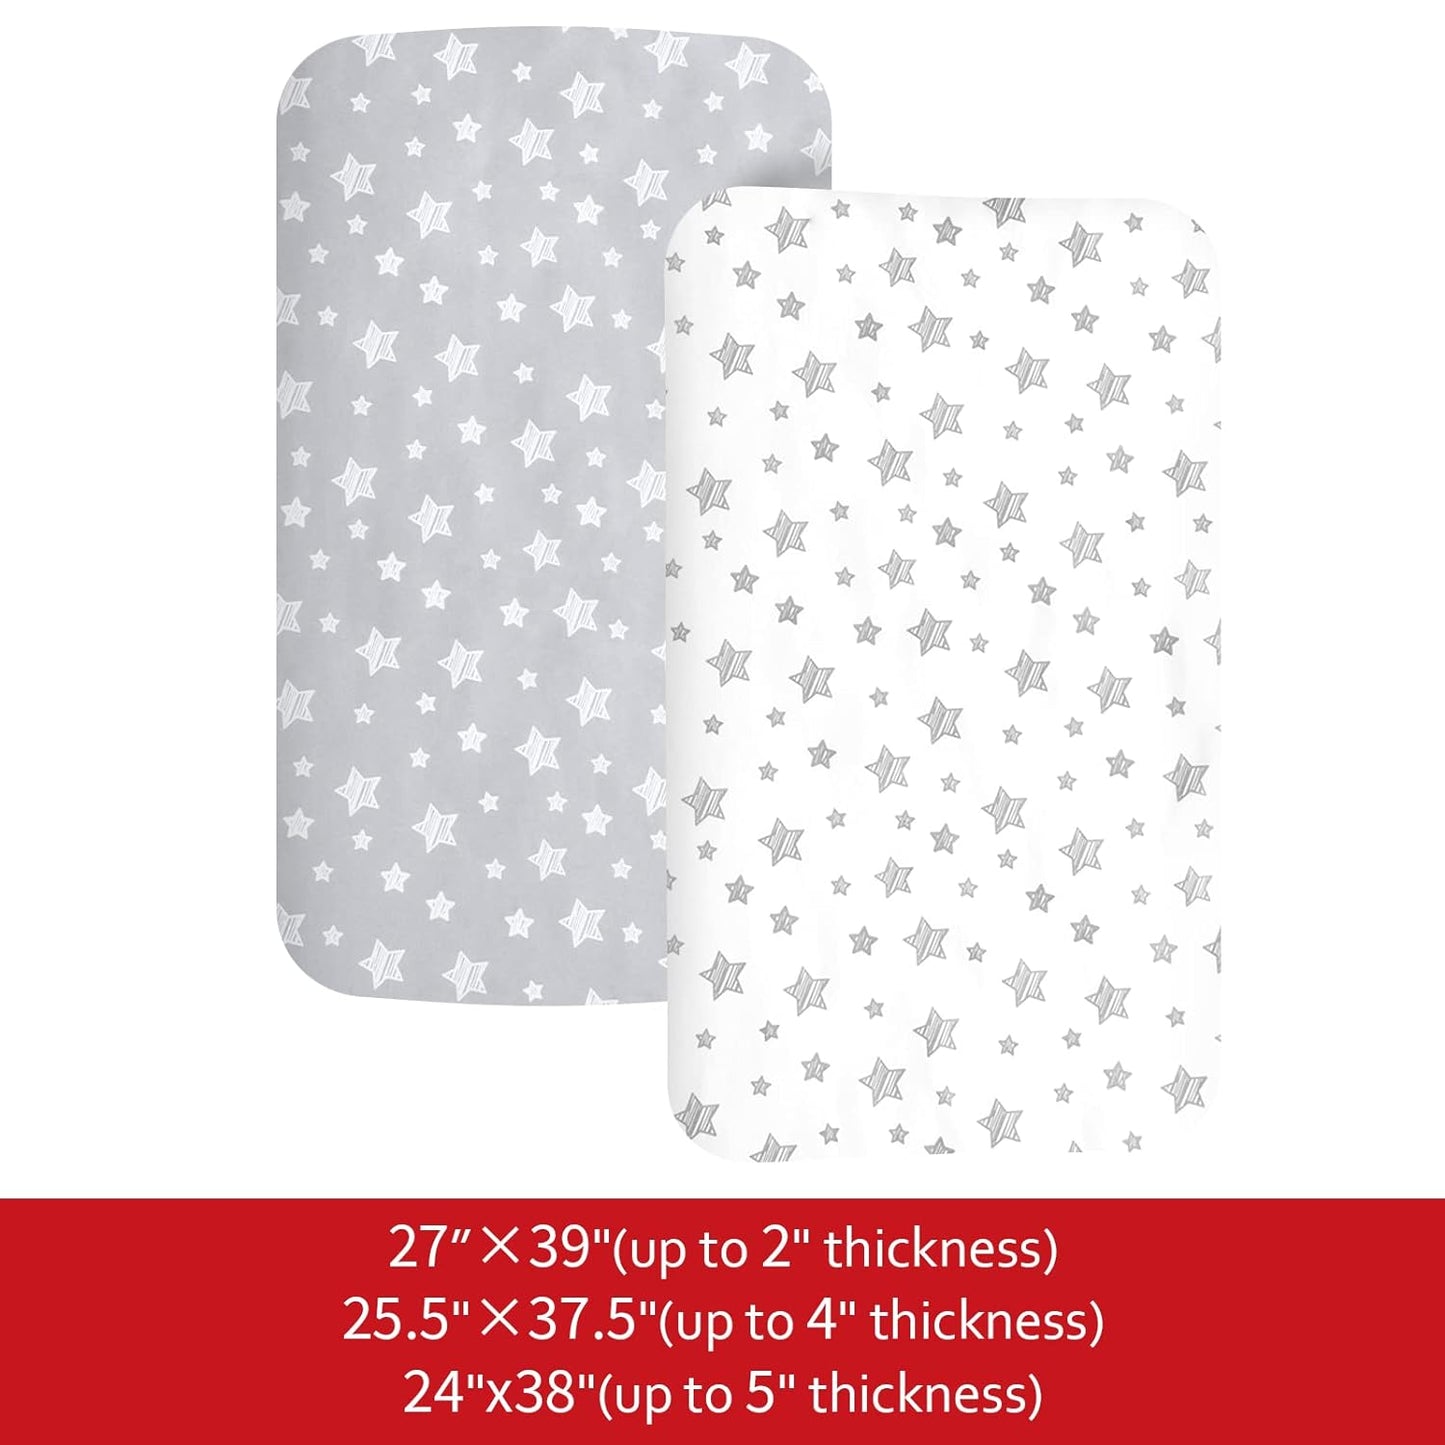 Pack n Play Sheet | Mini Crib Sheet - 2 Pack, Ultra-Soft Microfiber, Fits Graco Pack and Play, Grey Stars& White Stars